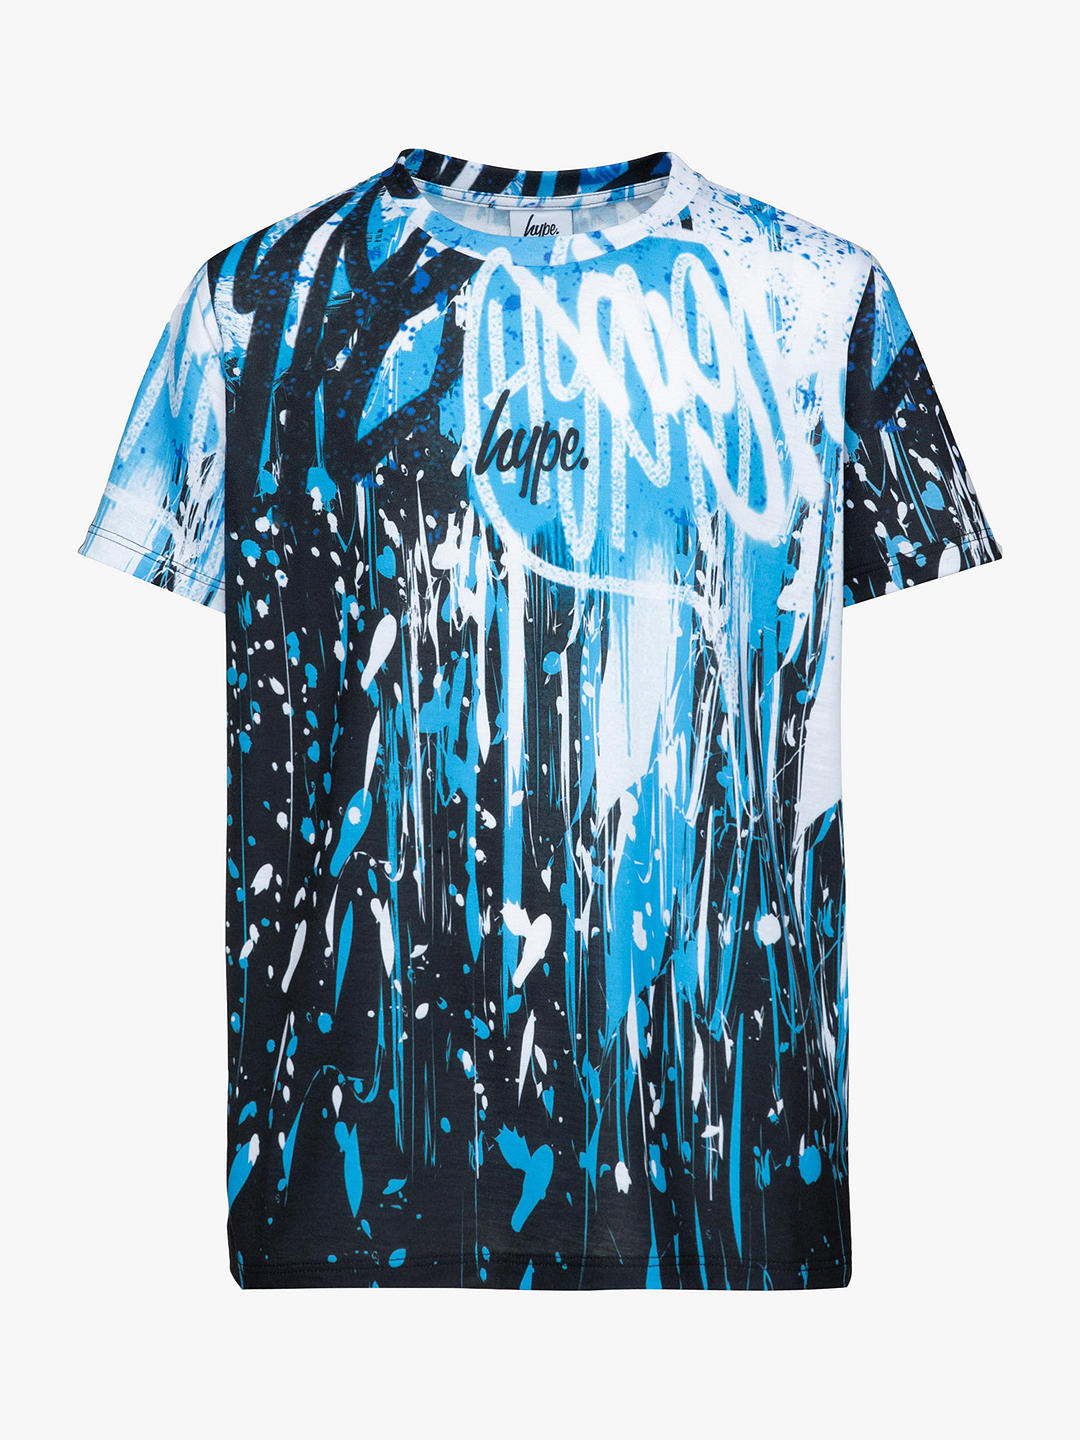 Hype Kids' Graffiti Drip T-Shirt, Blue/Multi